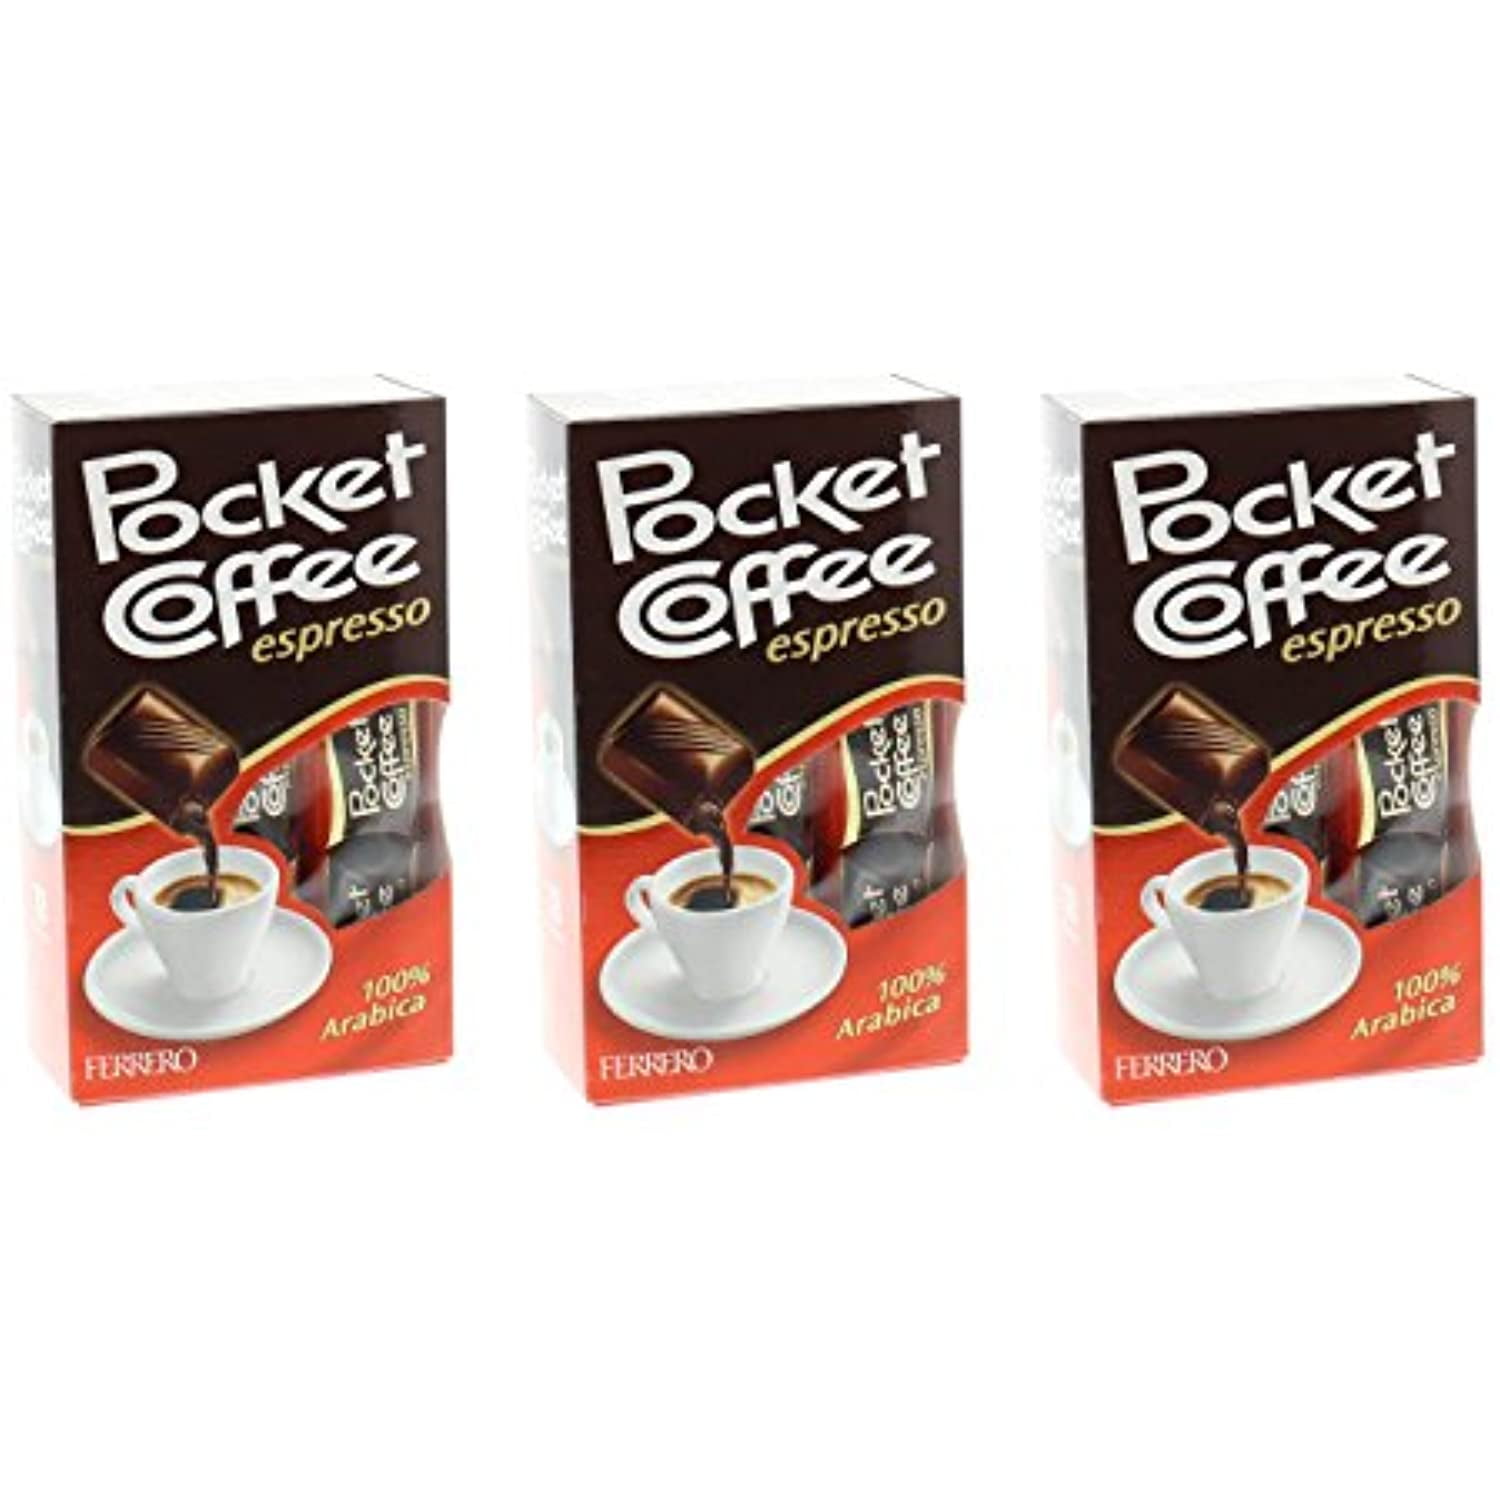 Buy Pocket Coffee Chocolate Bulk Ferrero online